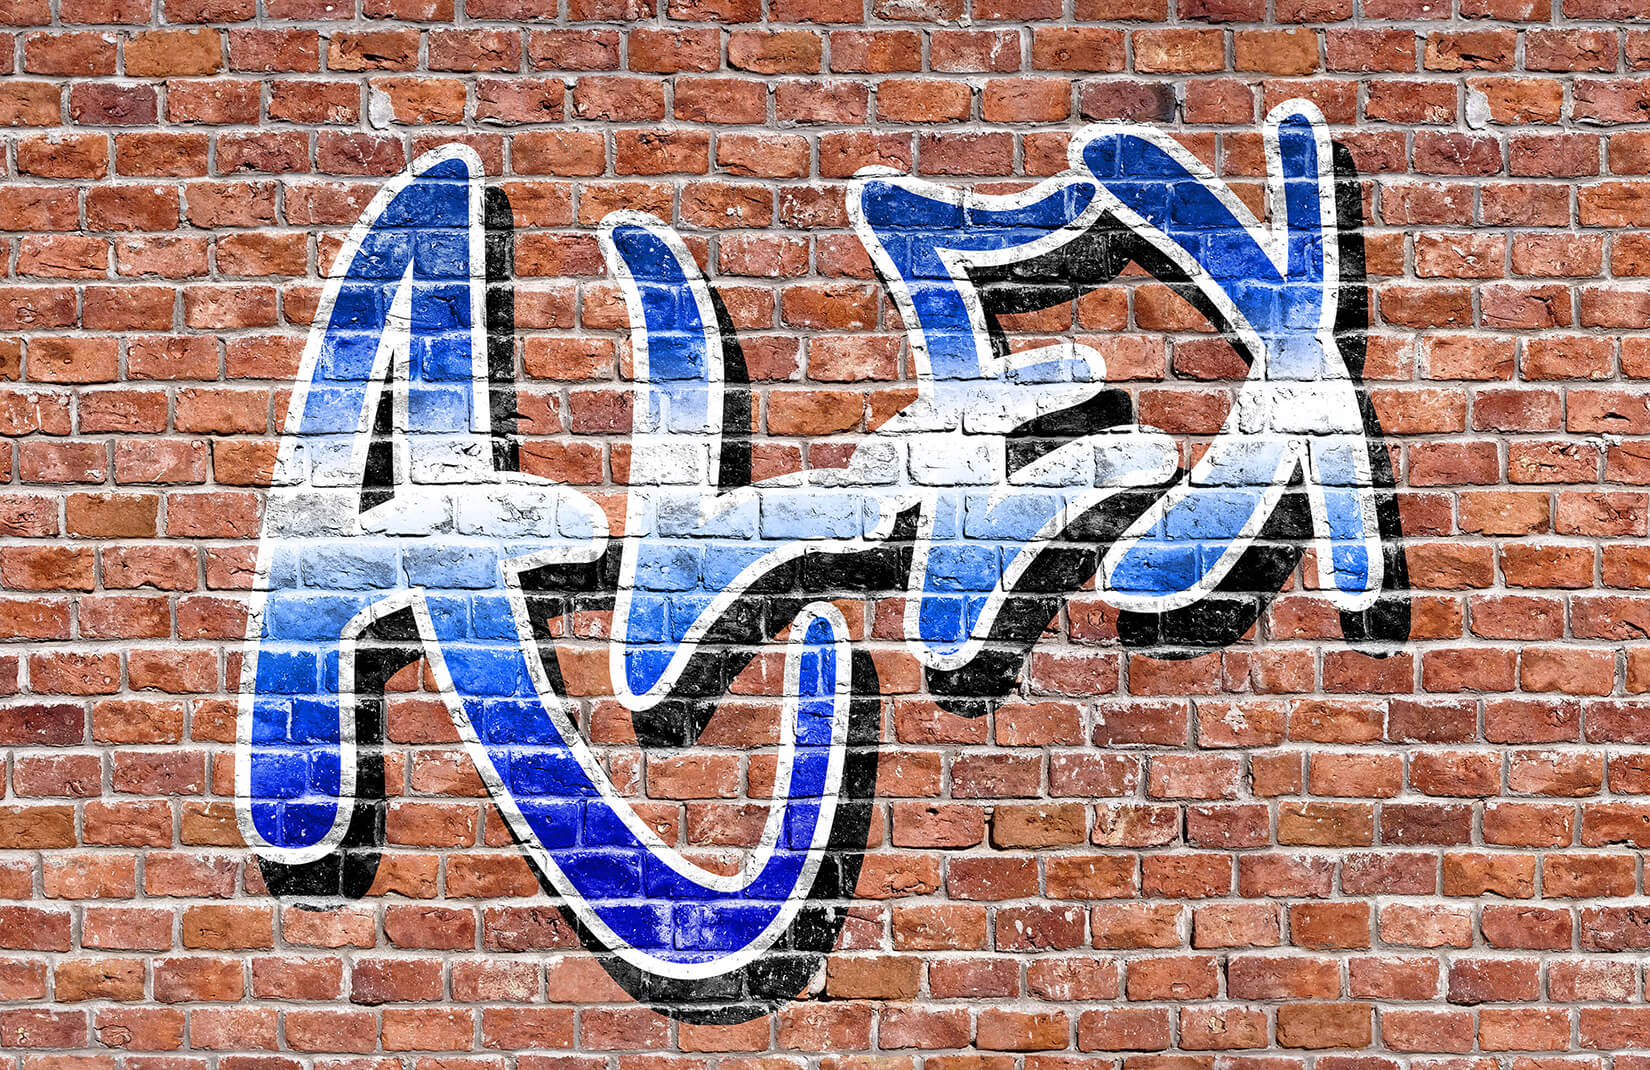 wallpaper graffiti name,brick,brickwork,wall,blue,street art